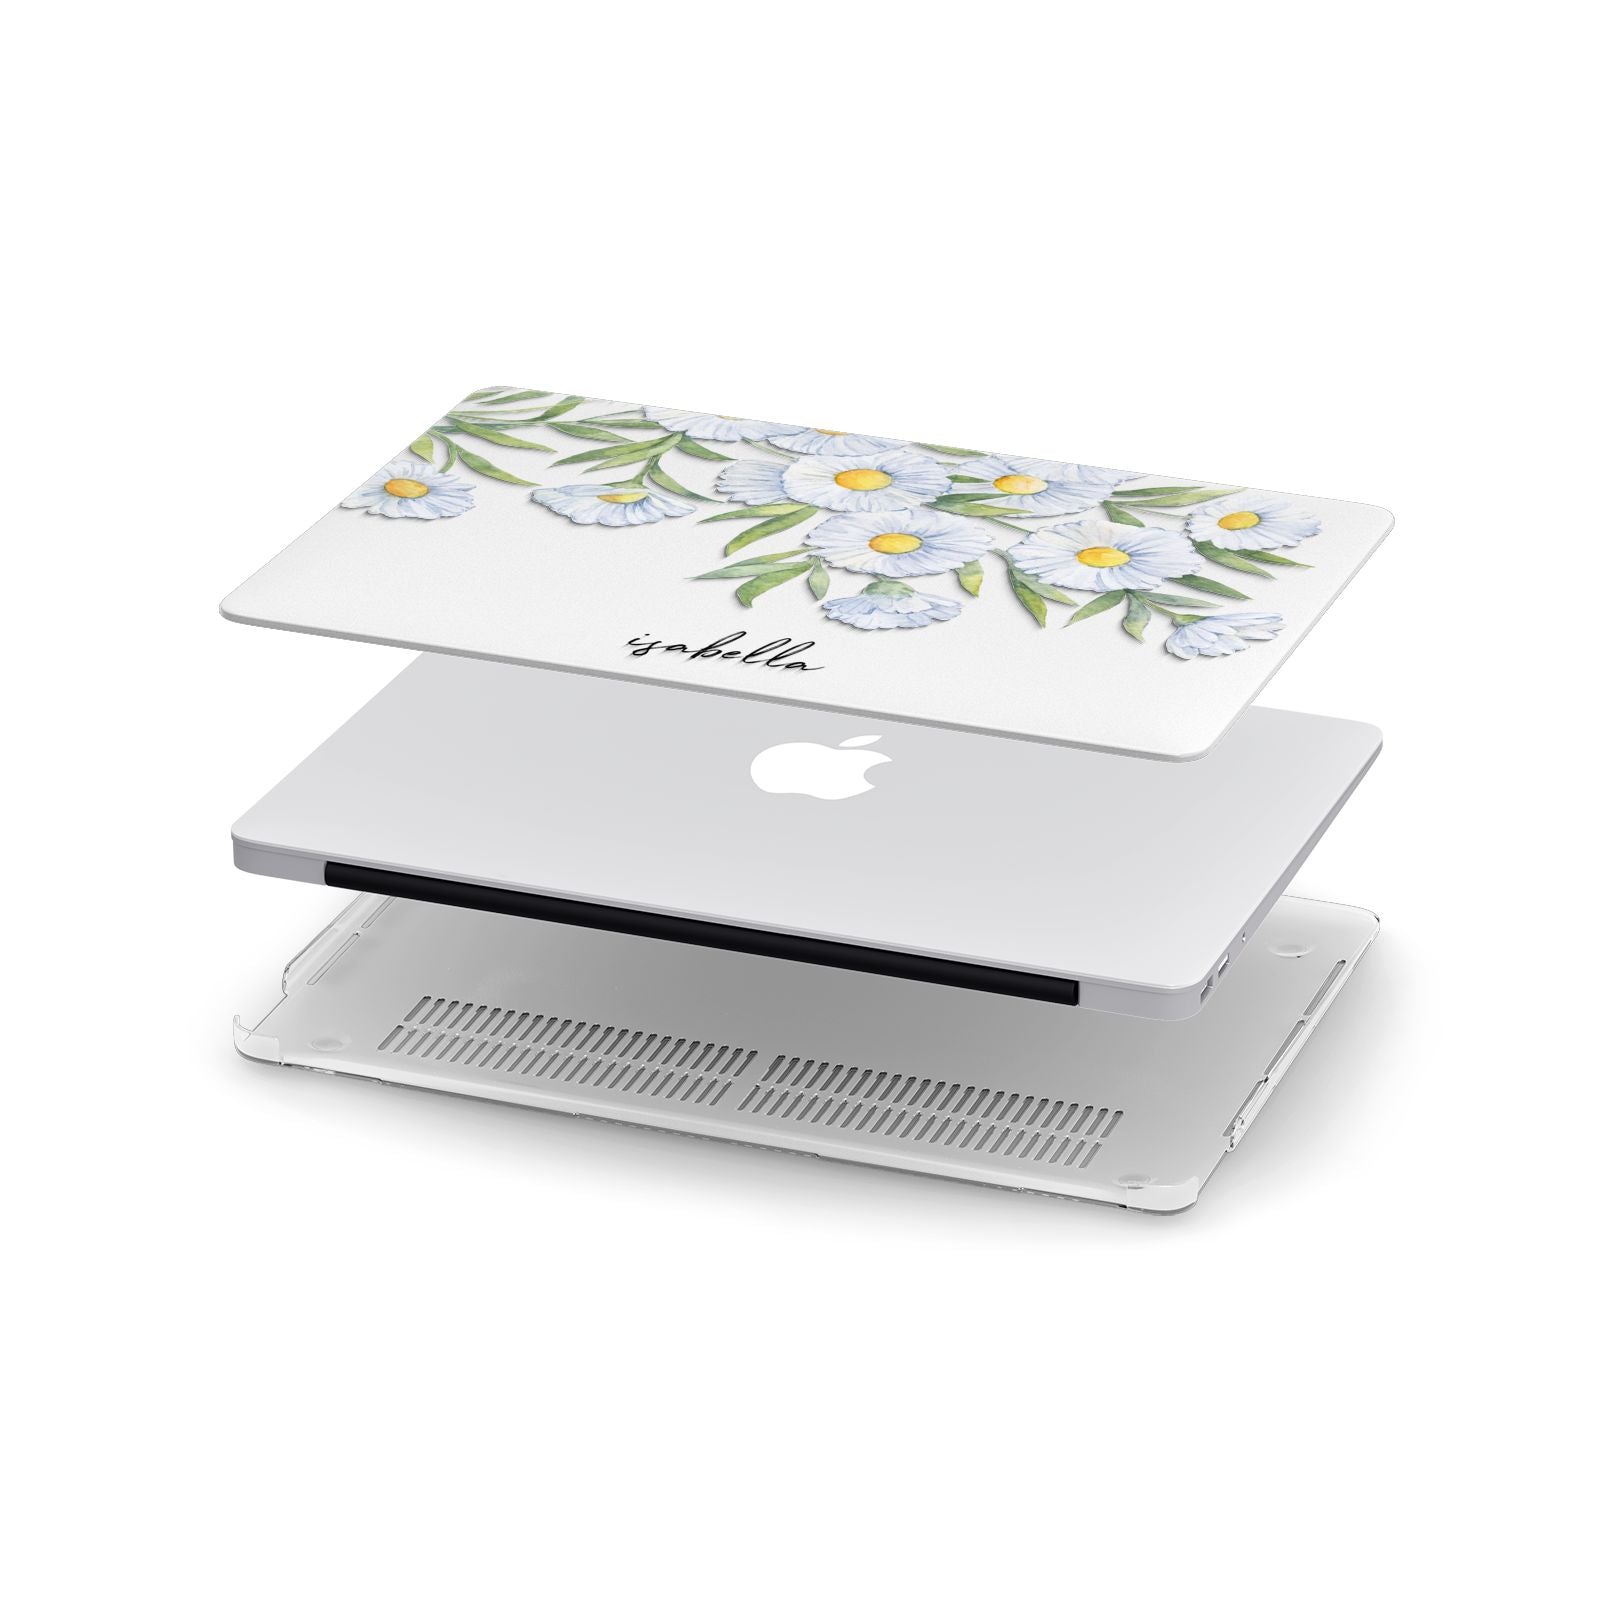 Personalised Daisy Flower Apple MacBook Case in Detail